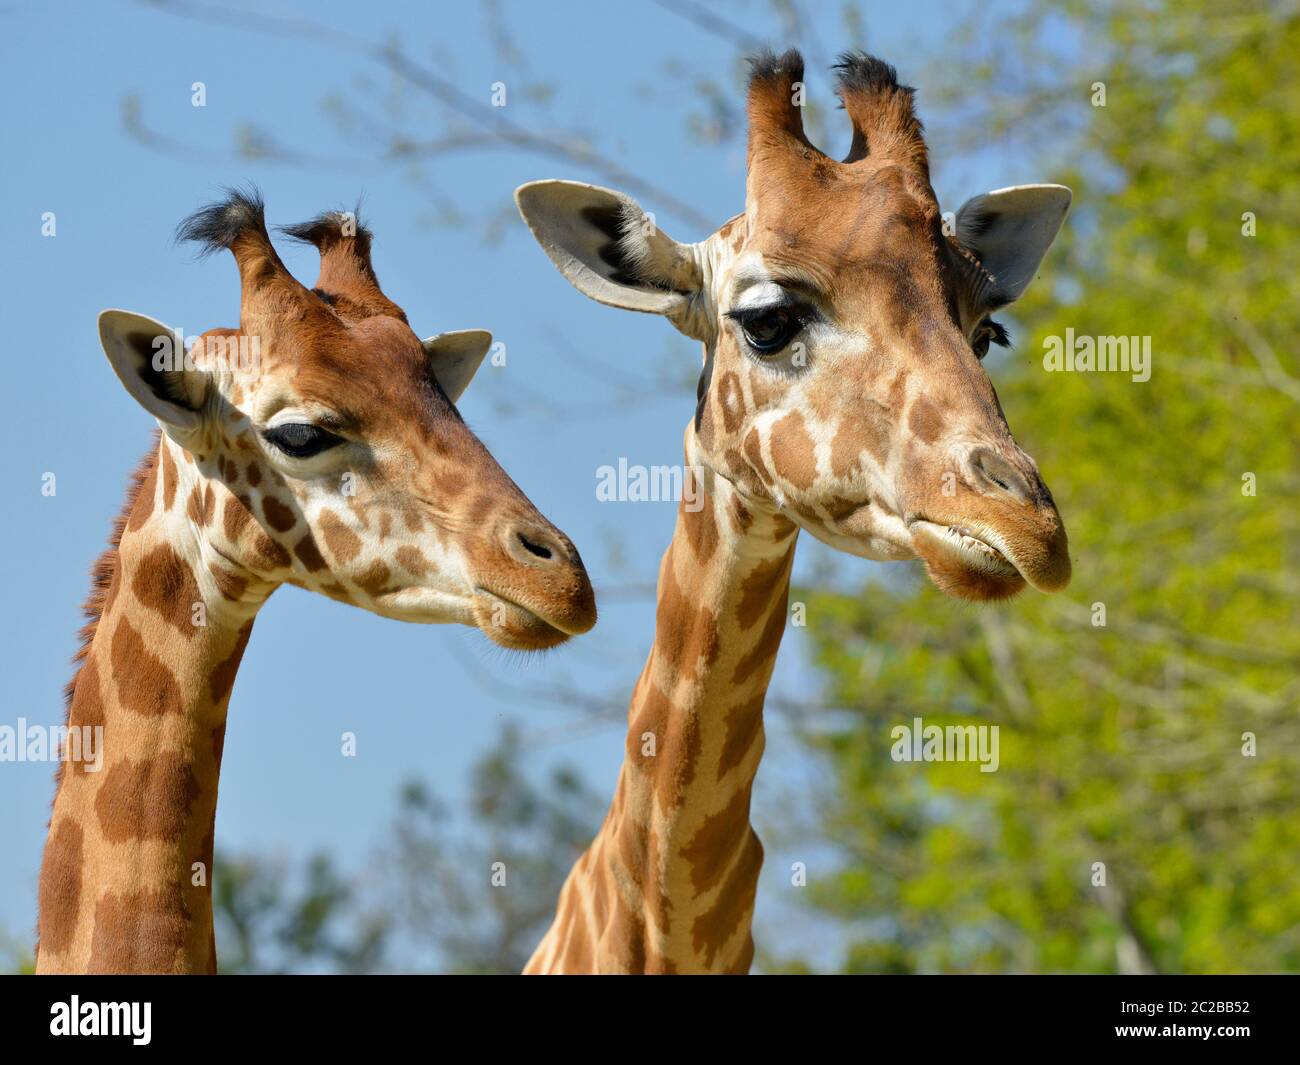 Closeup of two giraffes Stock Photo